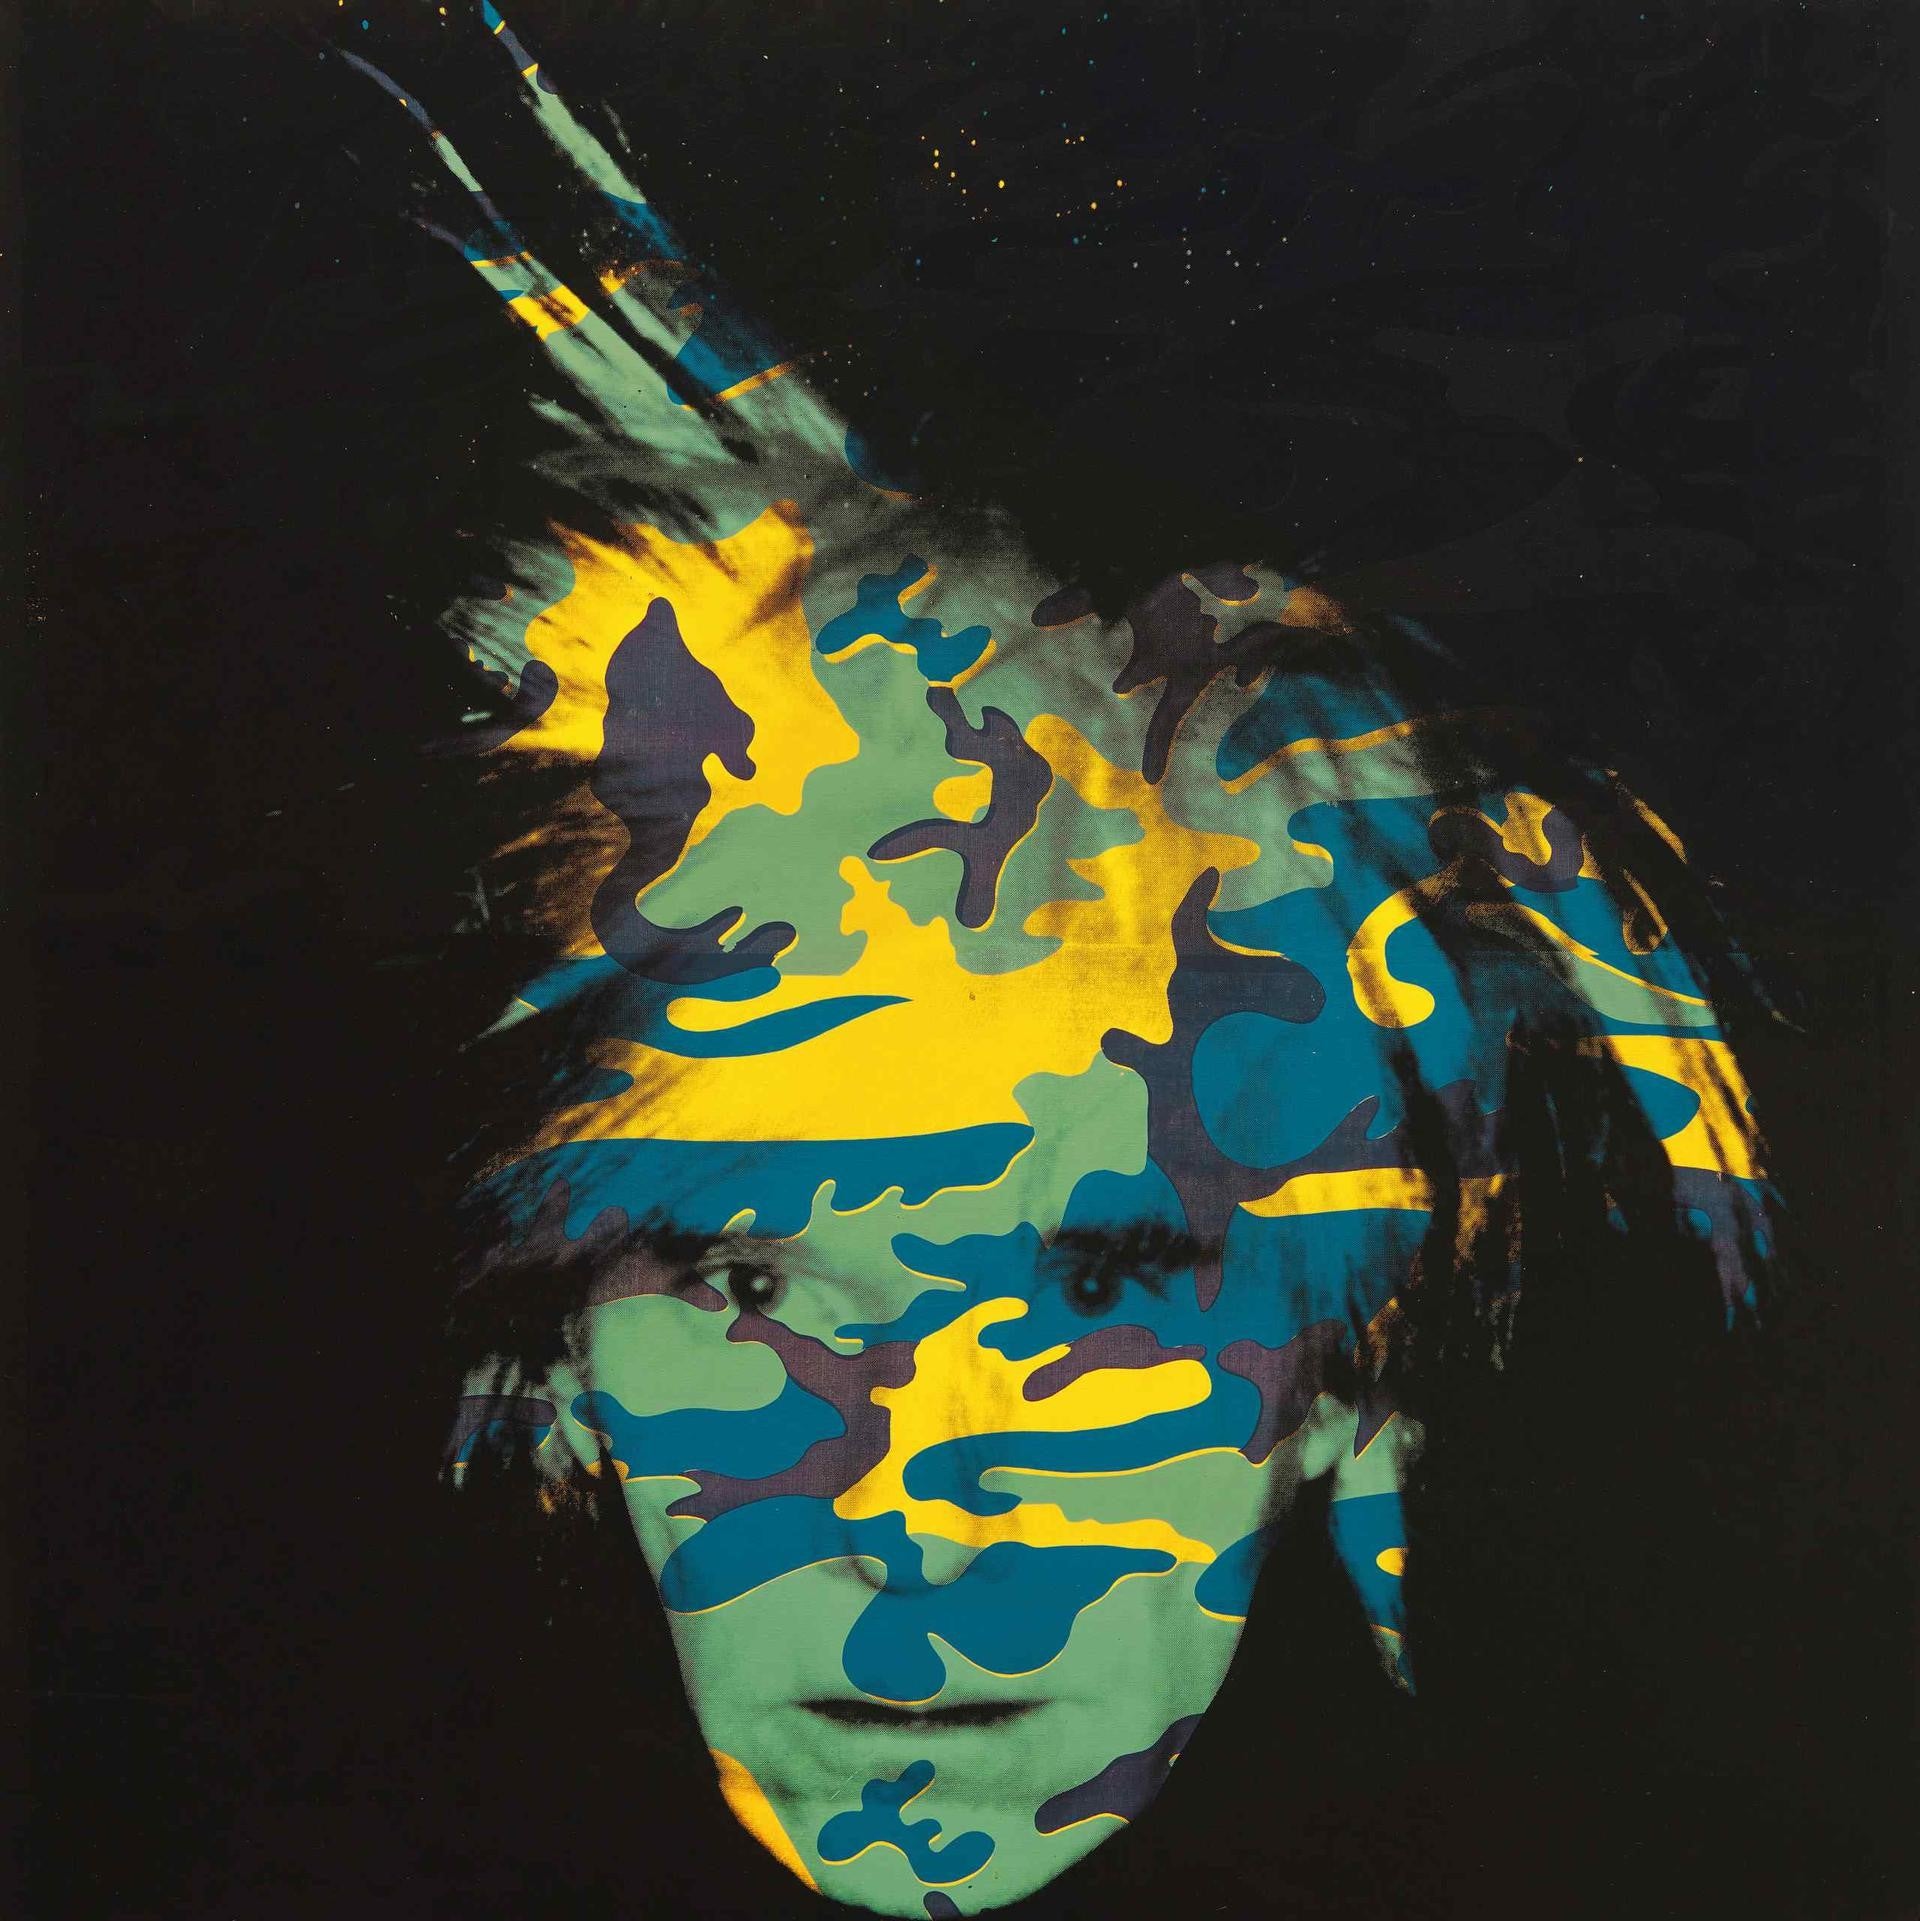 Andy Warhol, Self-Portrait, 1986 (Sotheby’s/PA)